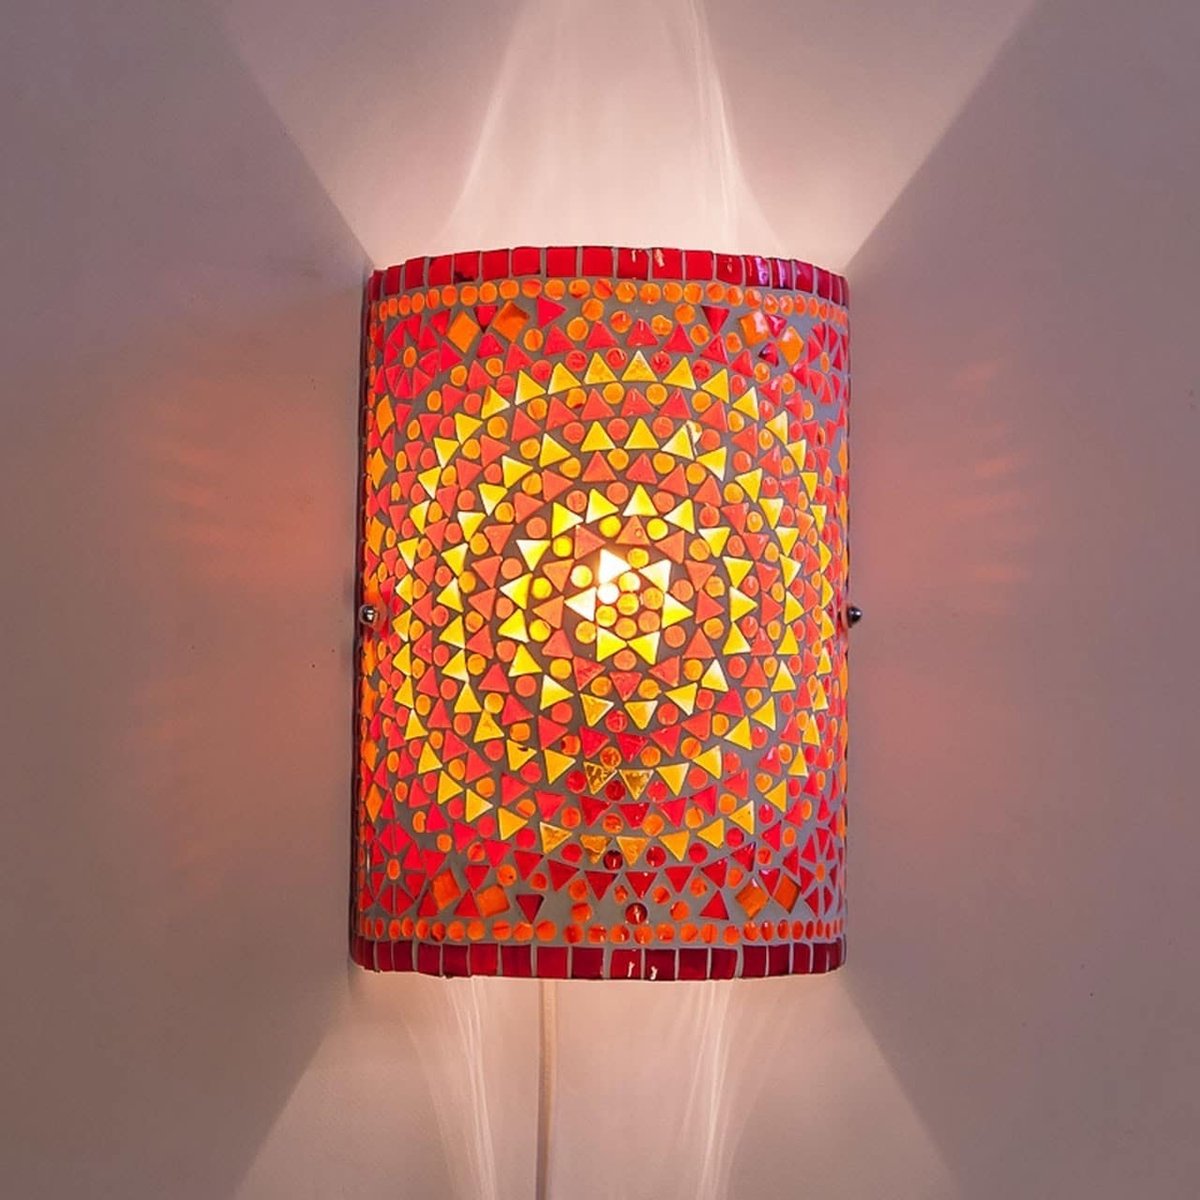 Oosterse mozaïek cilinder wandlamp | 1 lichts | oranje / rood | glas / metaal | 26 cm hoog | eetkamer / woonkamer / slaapkamer lamp | traditioneel / landelijk / sfeervol design